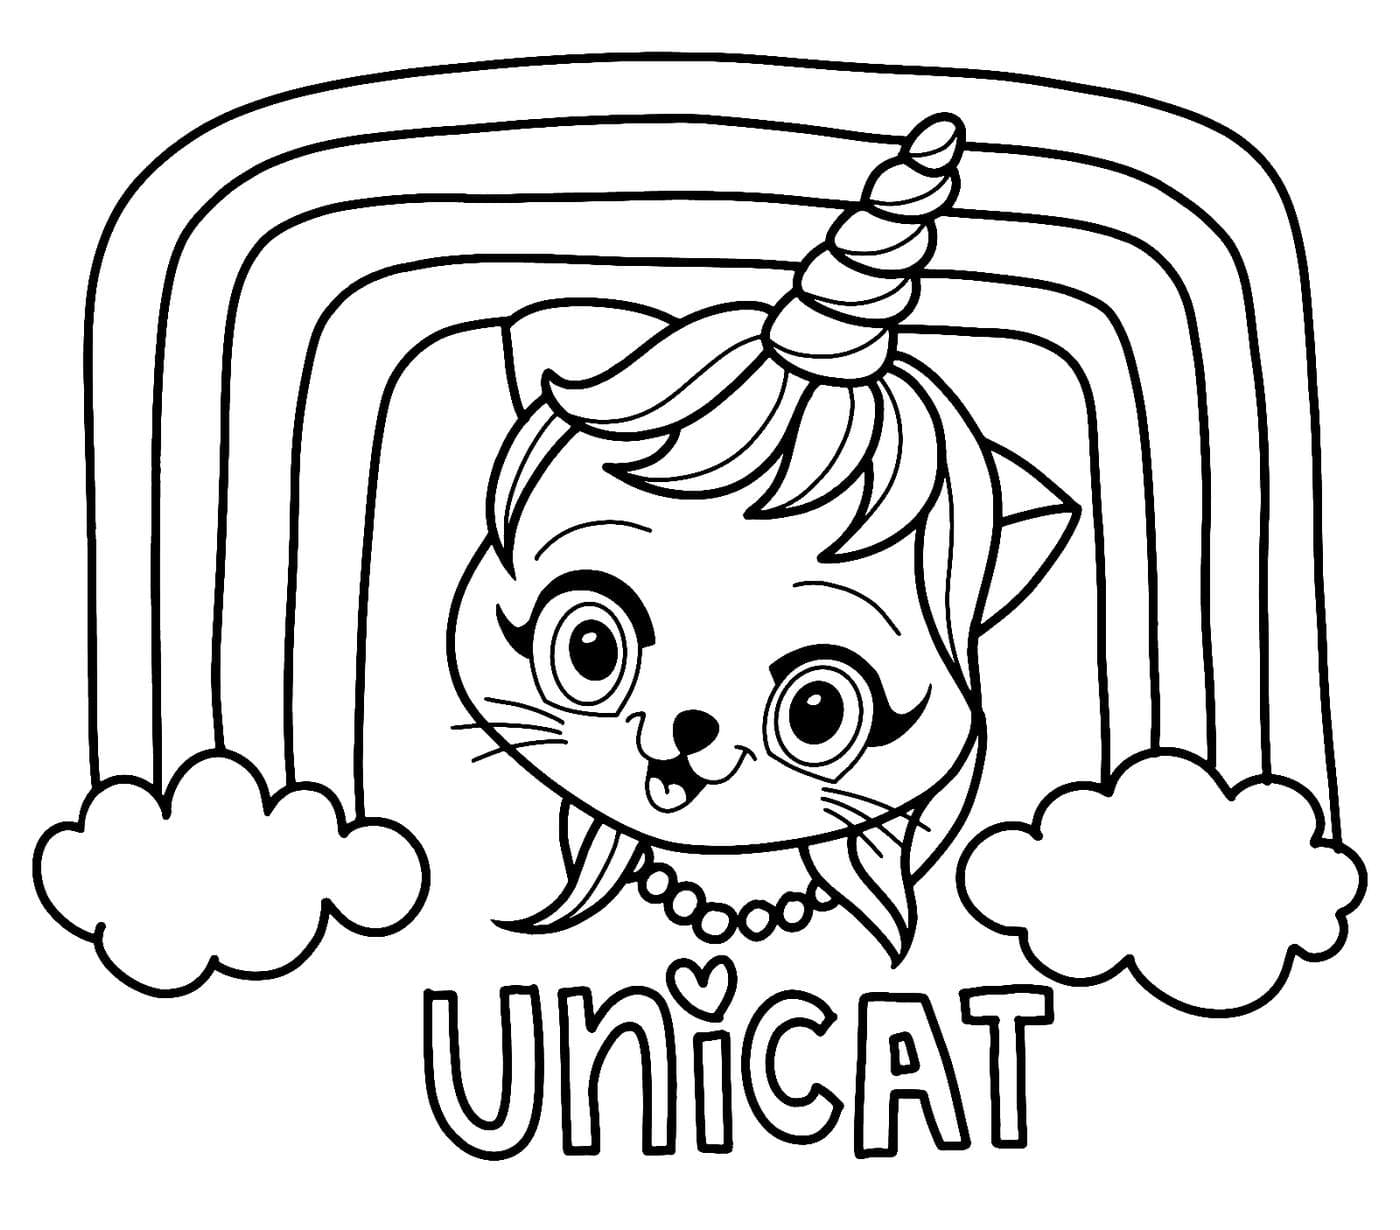 Para Colorear Gato-Unicornio para niños pequeños